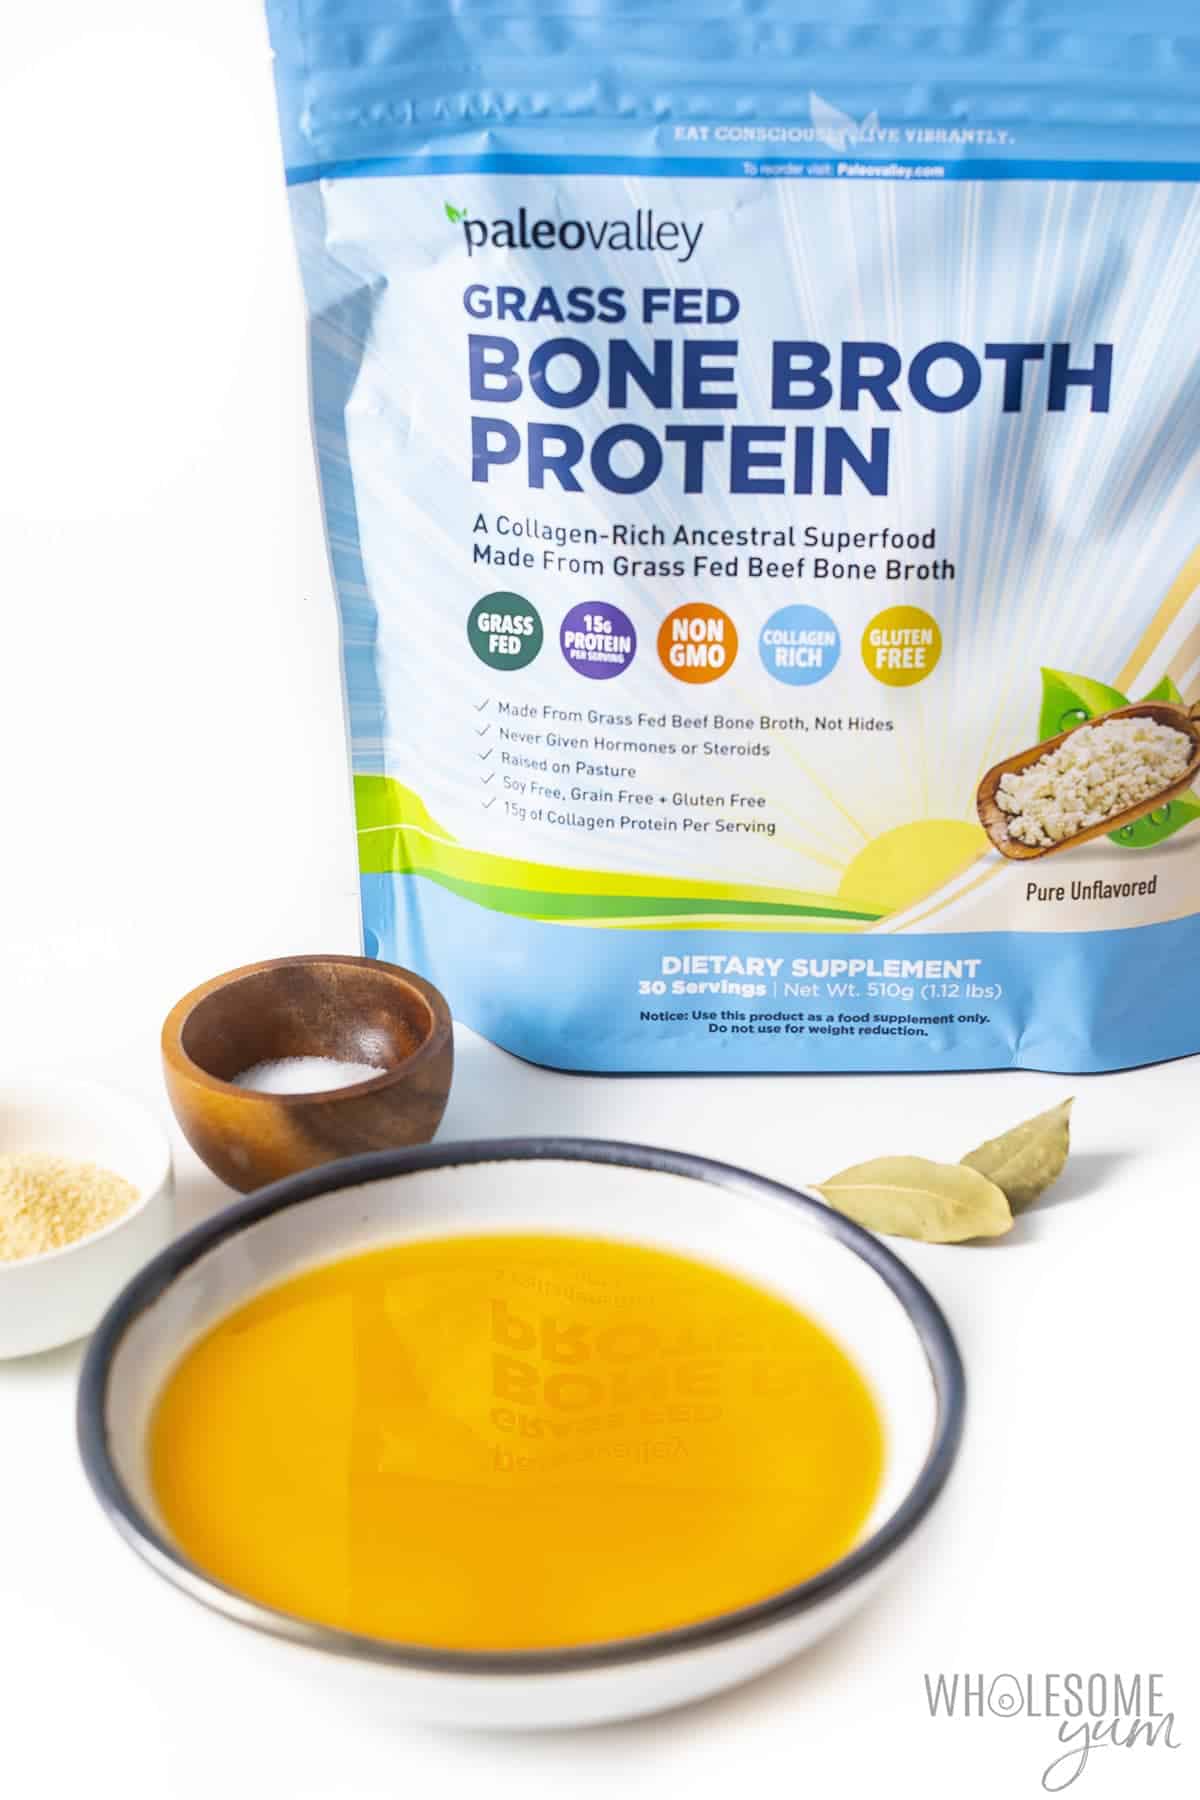 Bone broth recipe next to Paleovalley Bone Broth Protein package